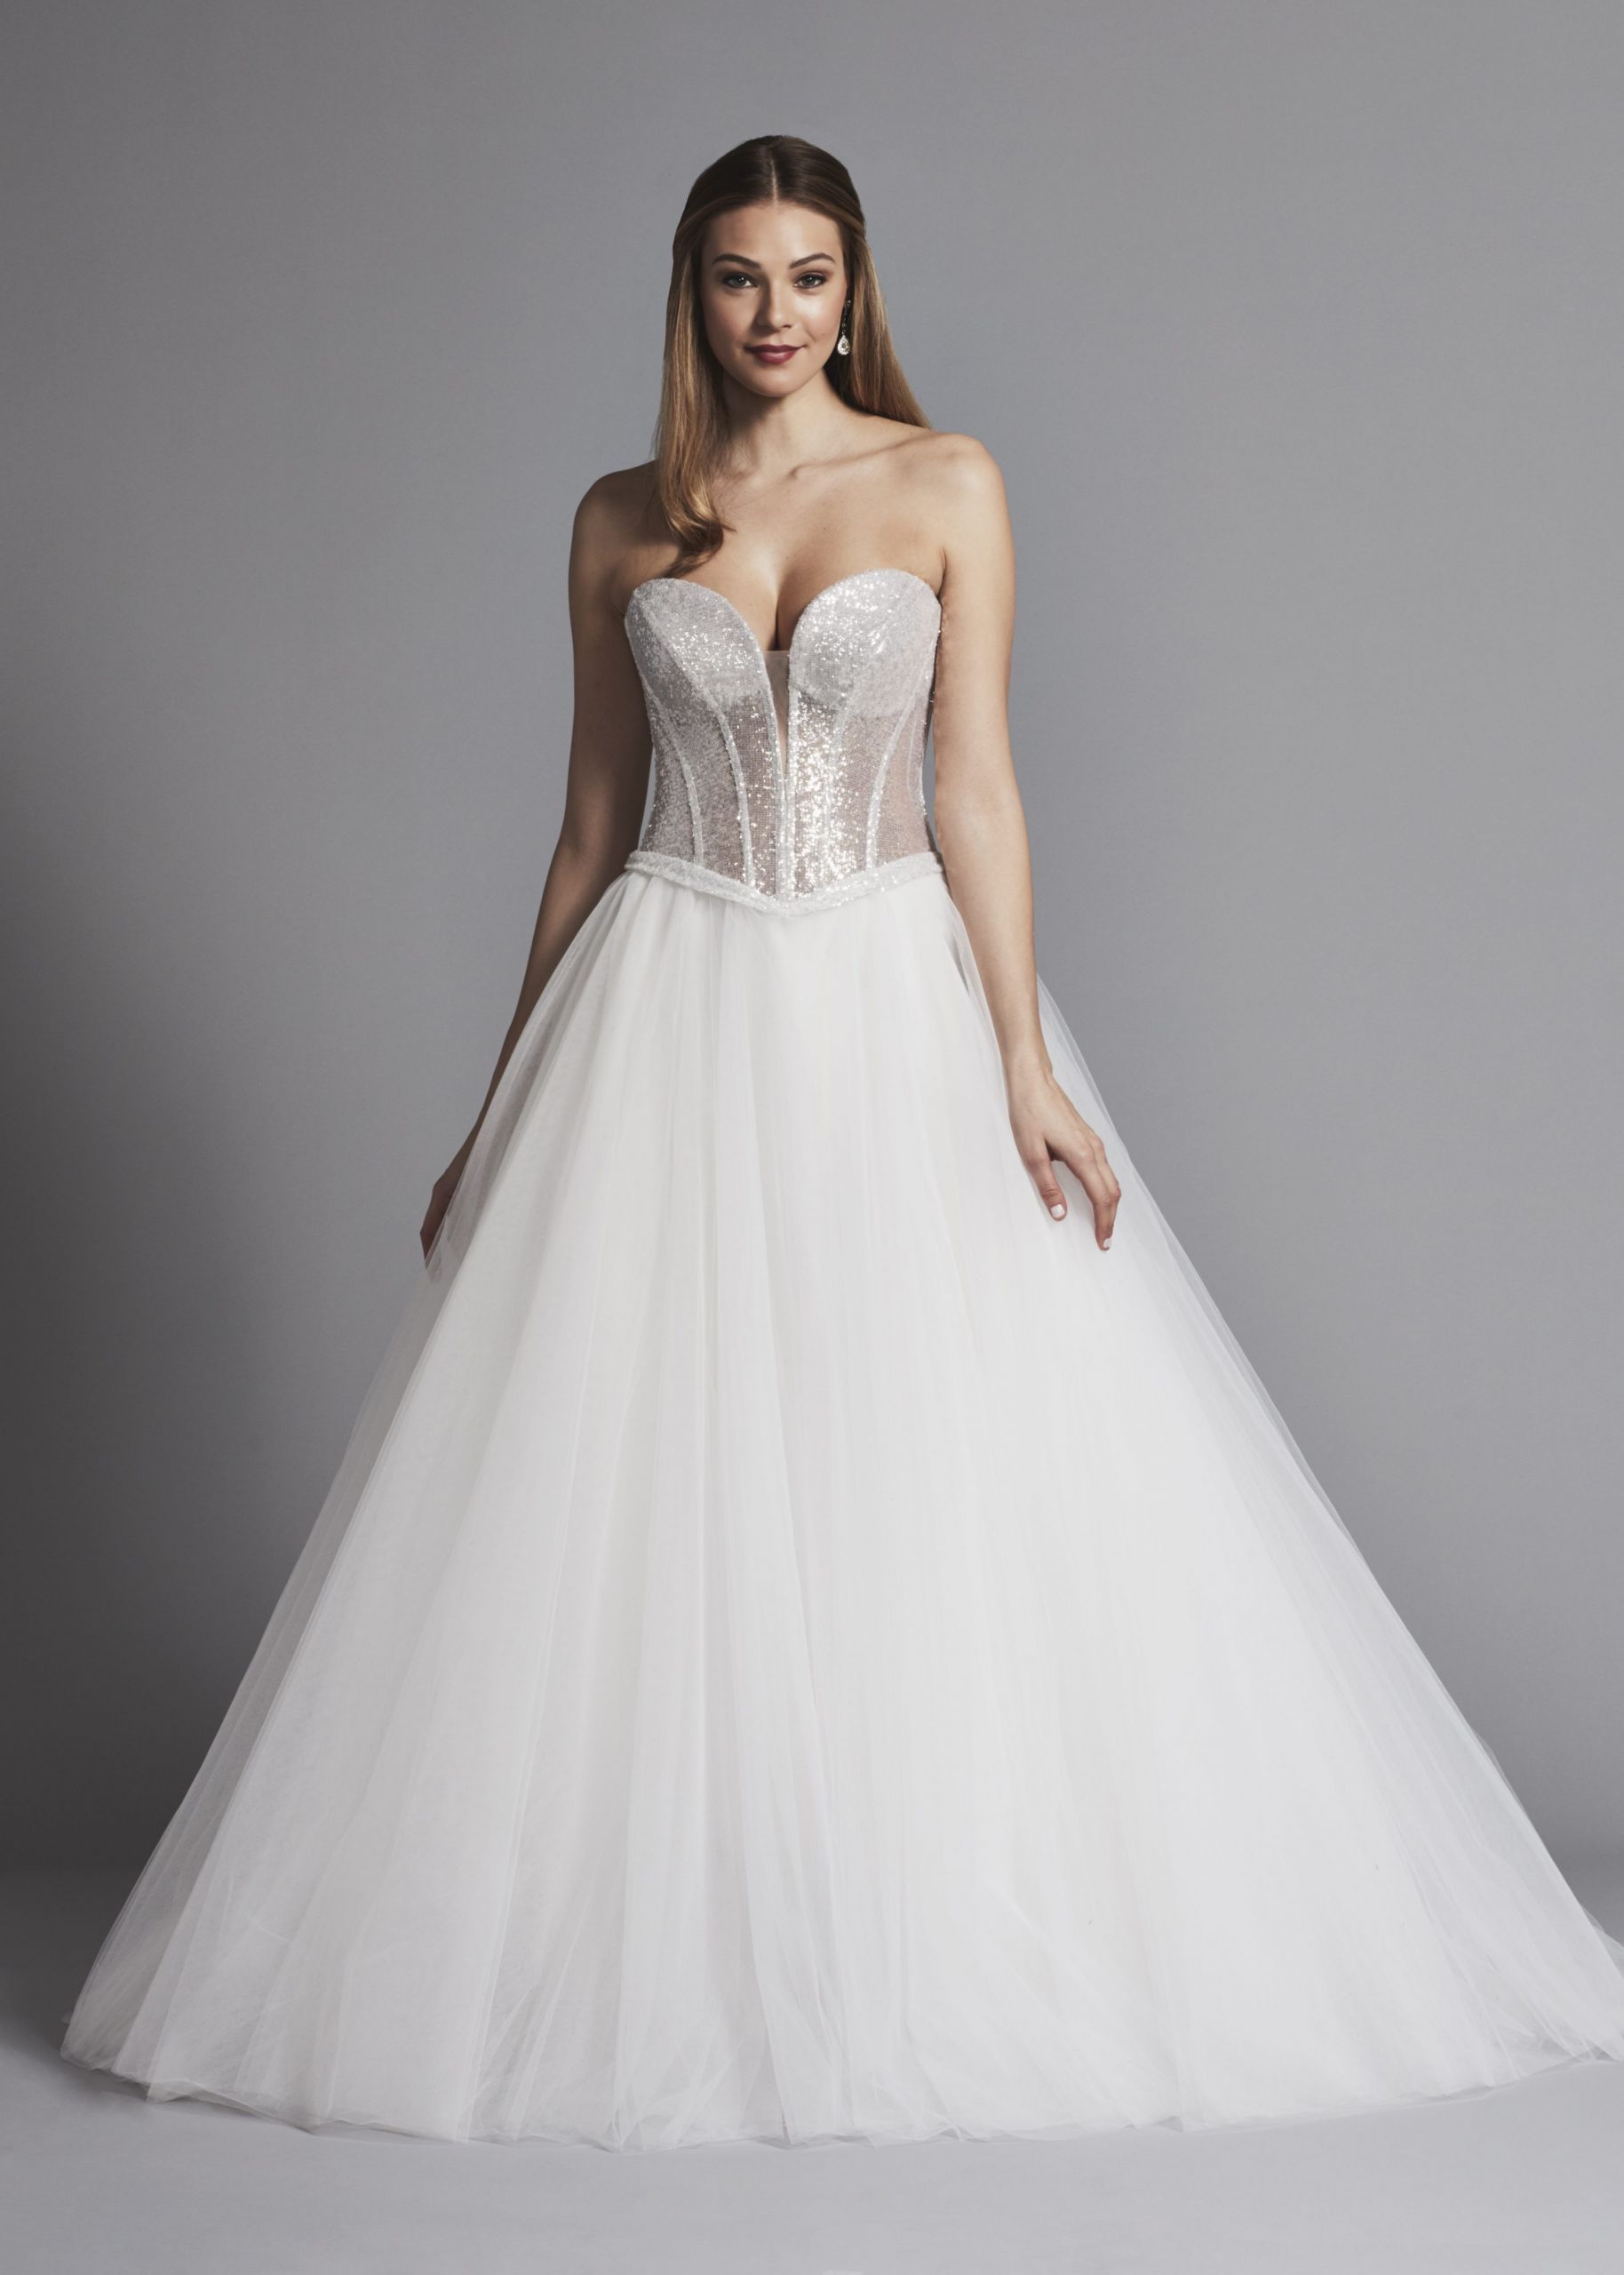 Corset Wedding Dresses
 Glitter Strapless Ball Gown Wedding Dress With Corset